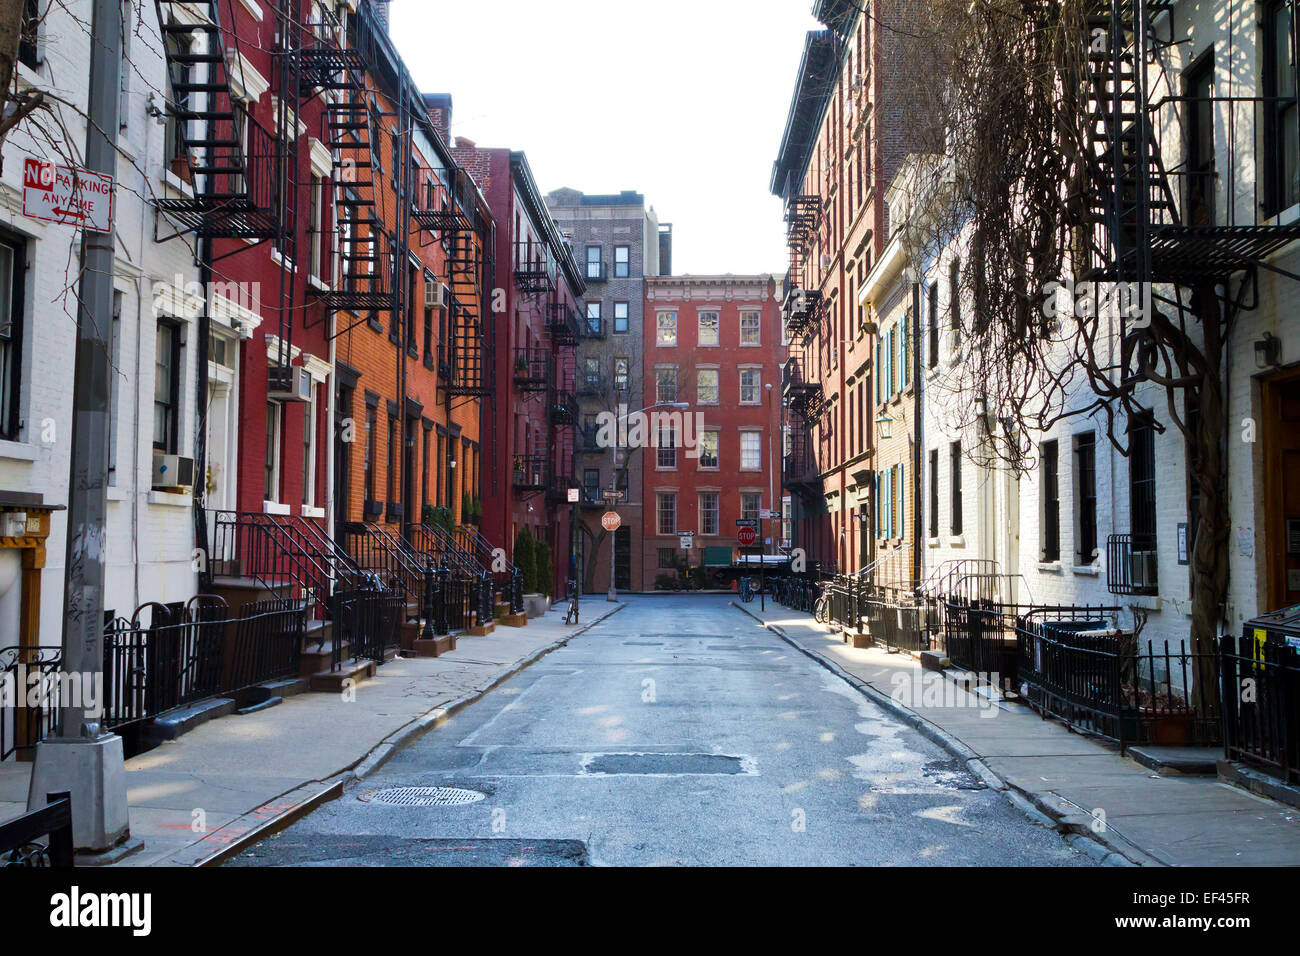 New York City - Historic buildings on Gay Street in Manhattan Stock Photo